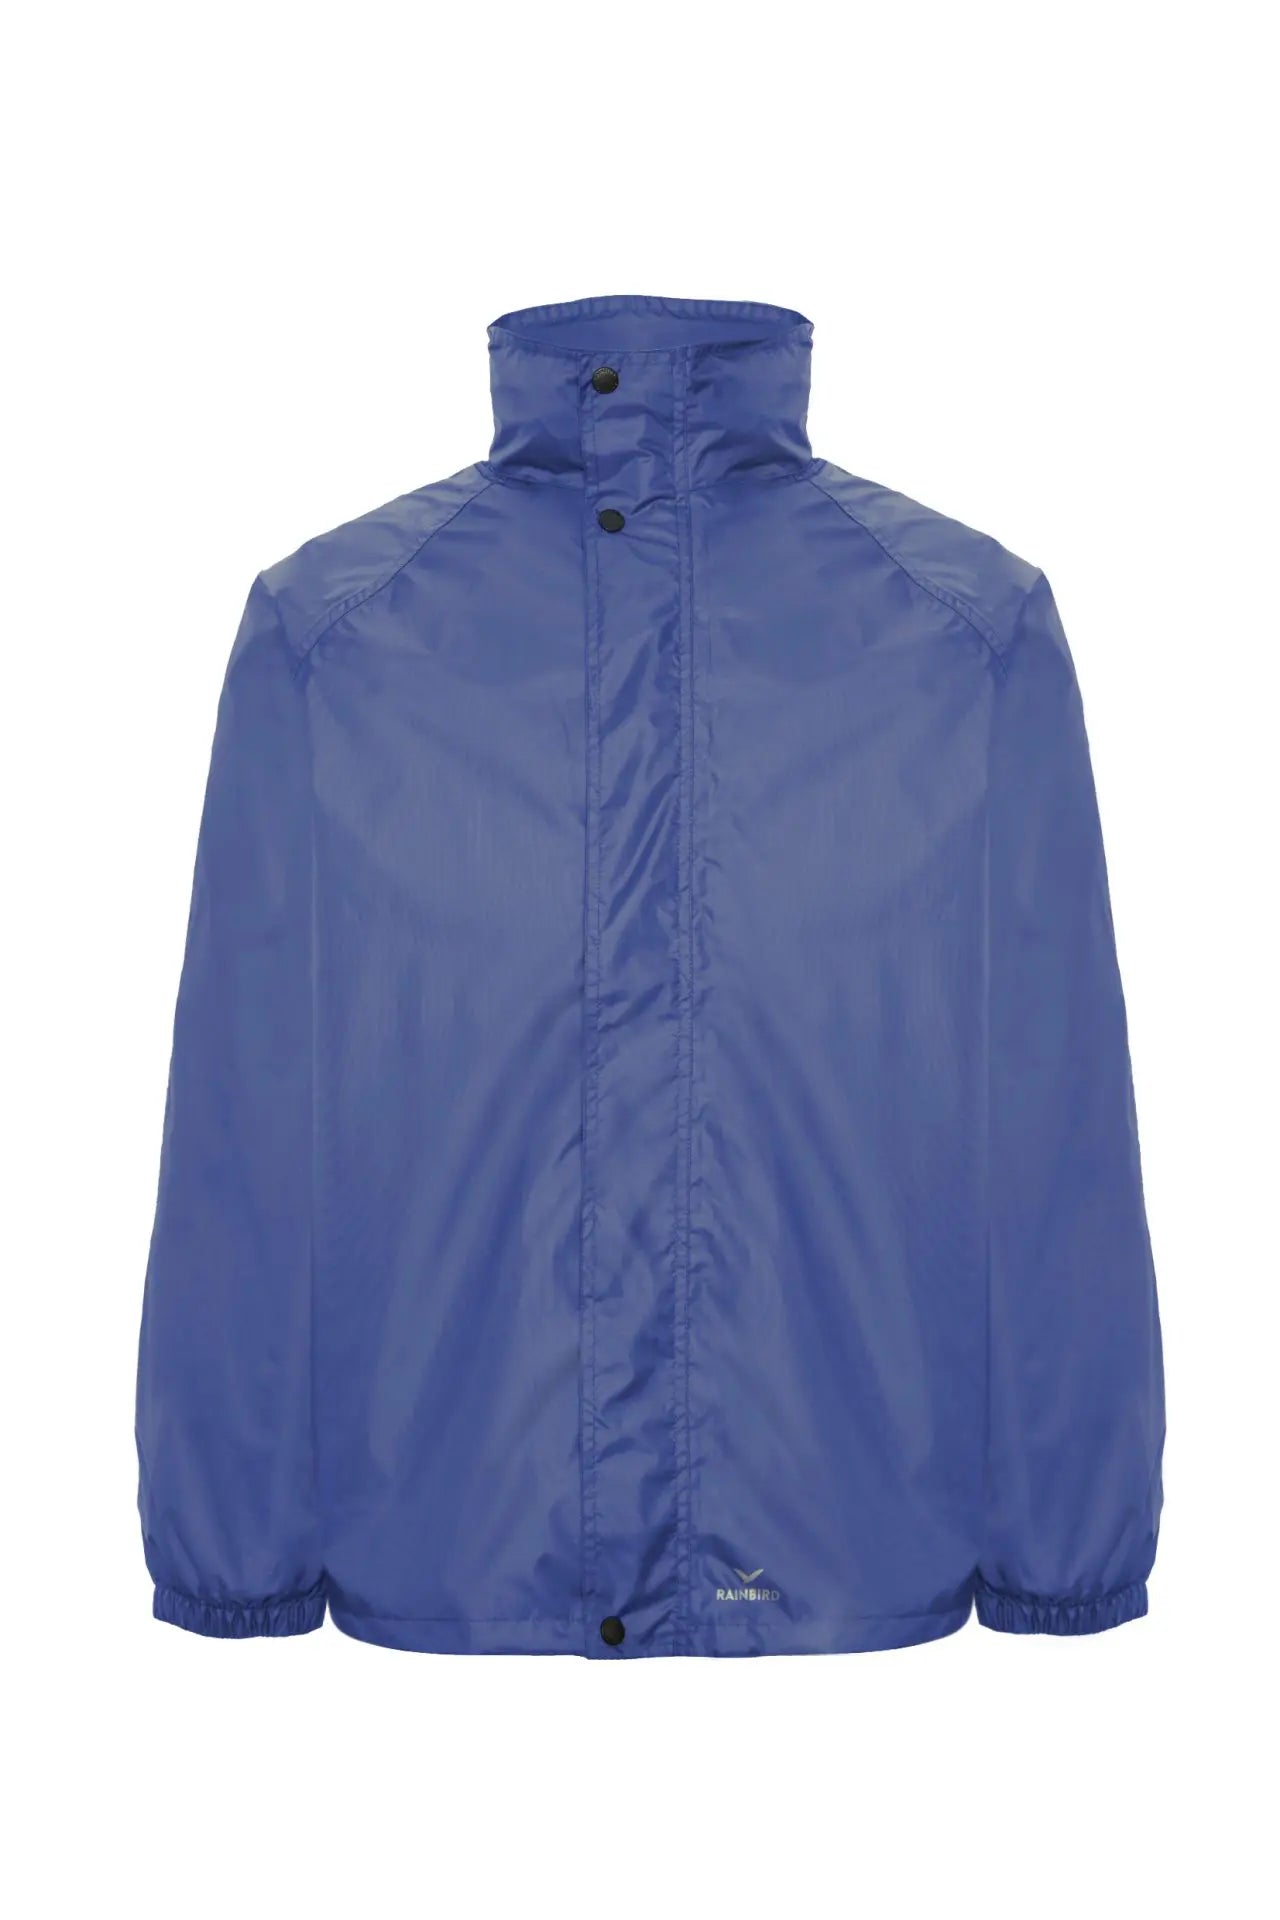 Adults STOWaway Rain Jacket 7000mm Waterproof Rating Black Small